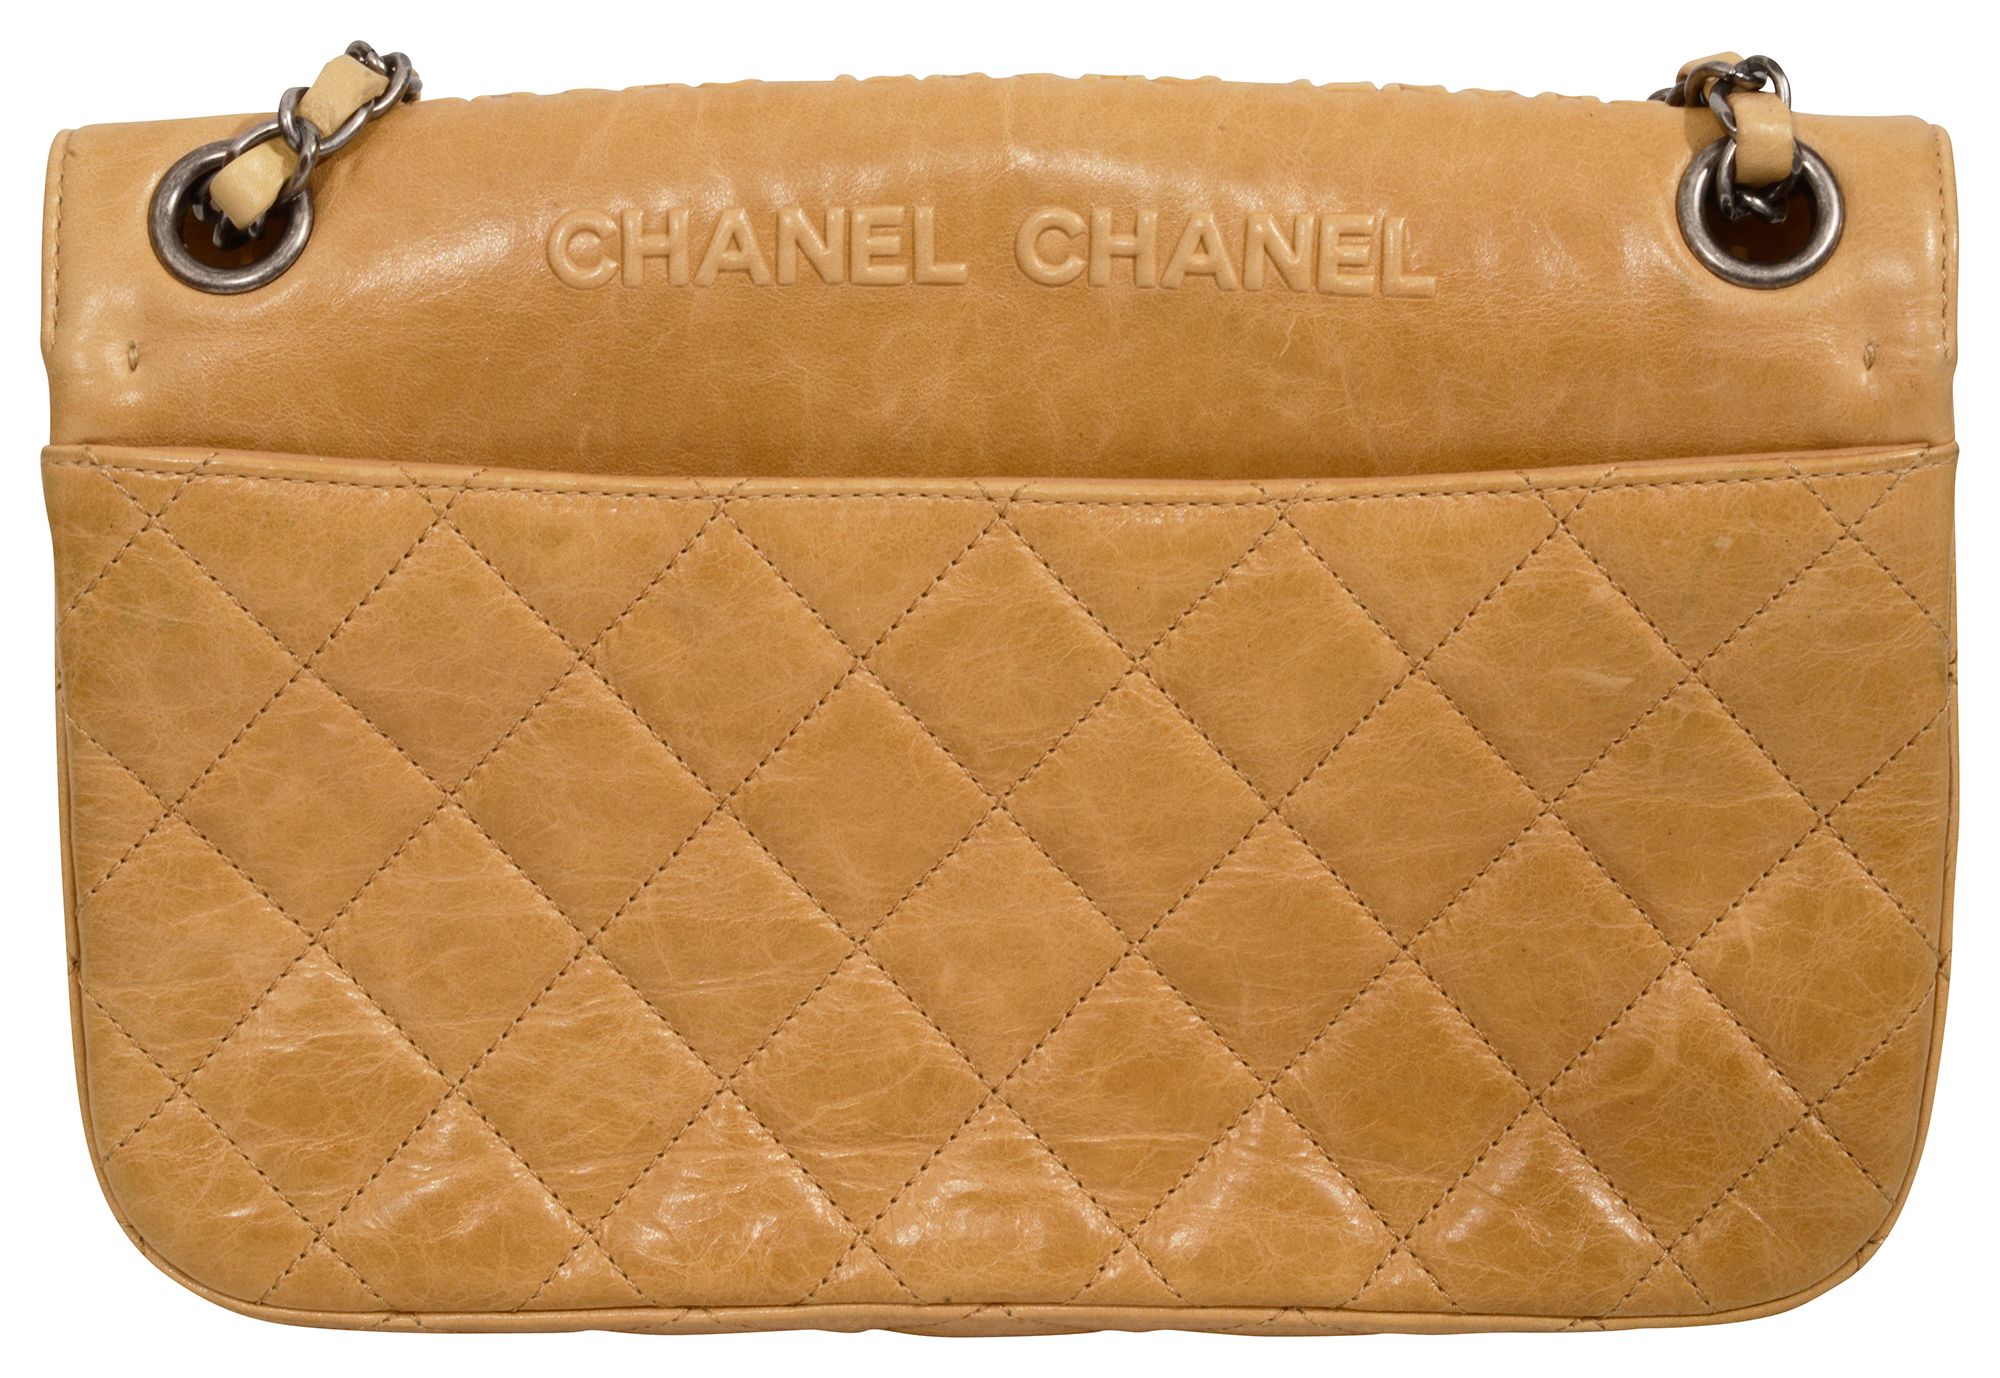 A Chanel biege calfskin flap bag - Image 3 of 3